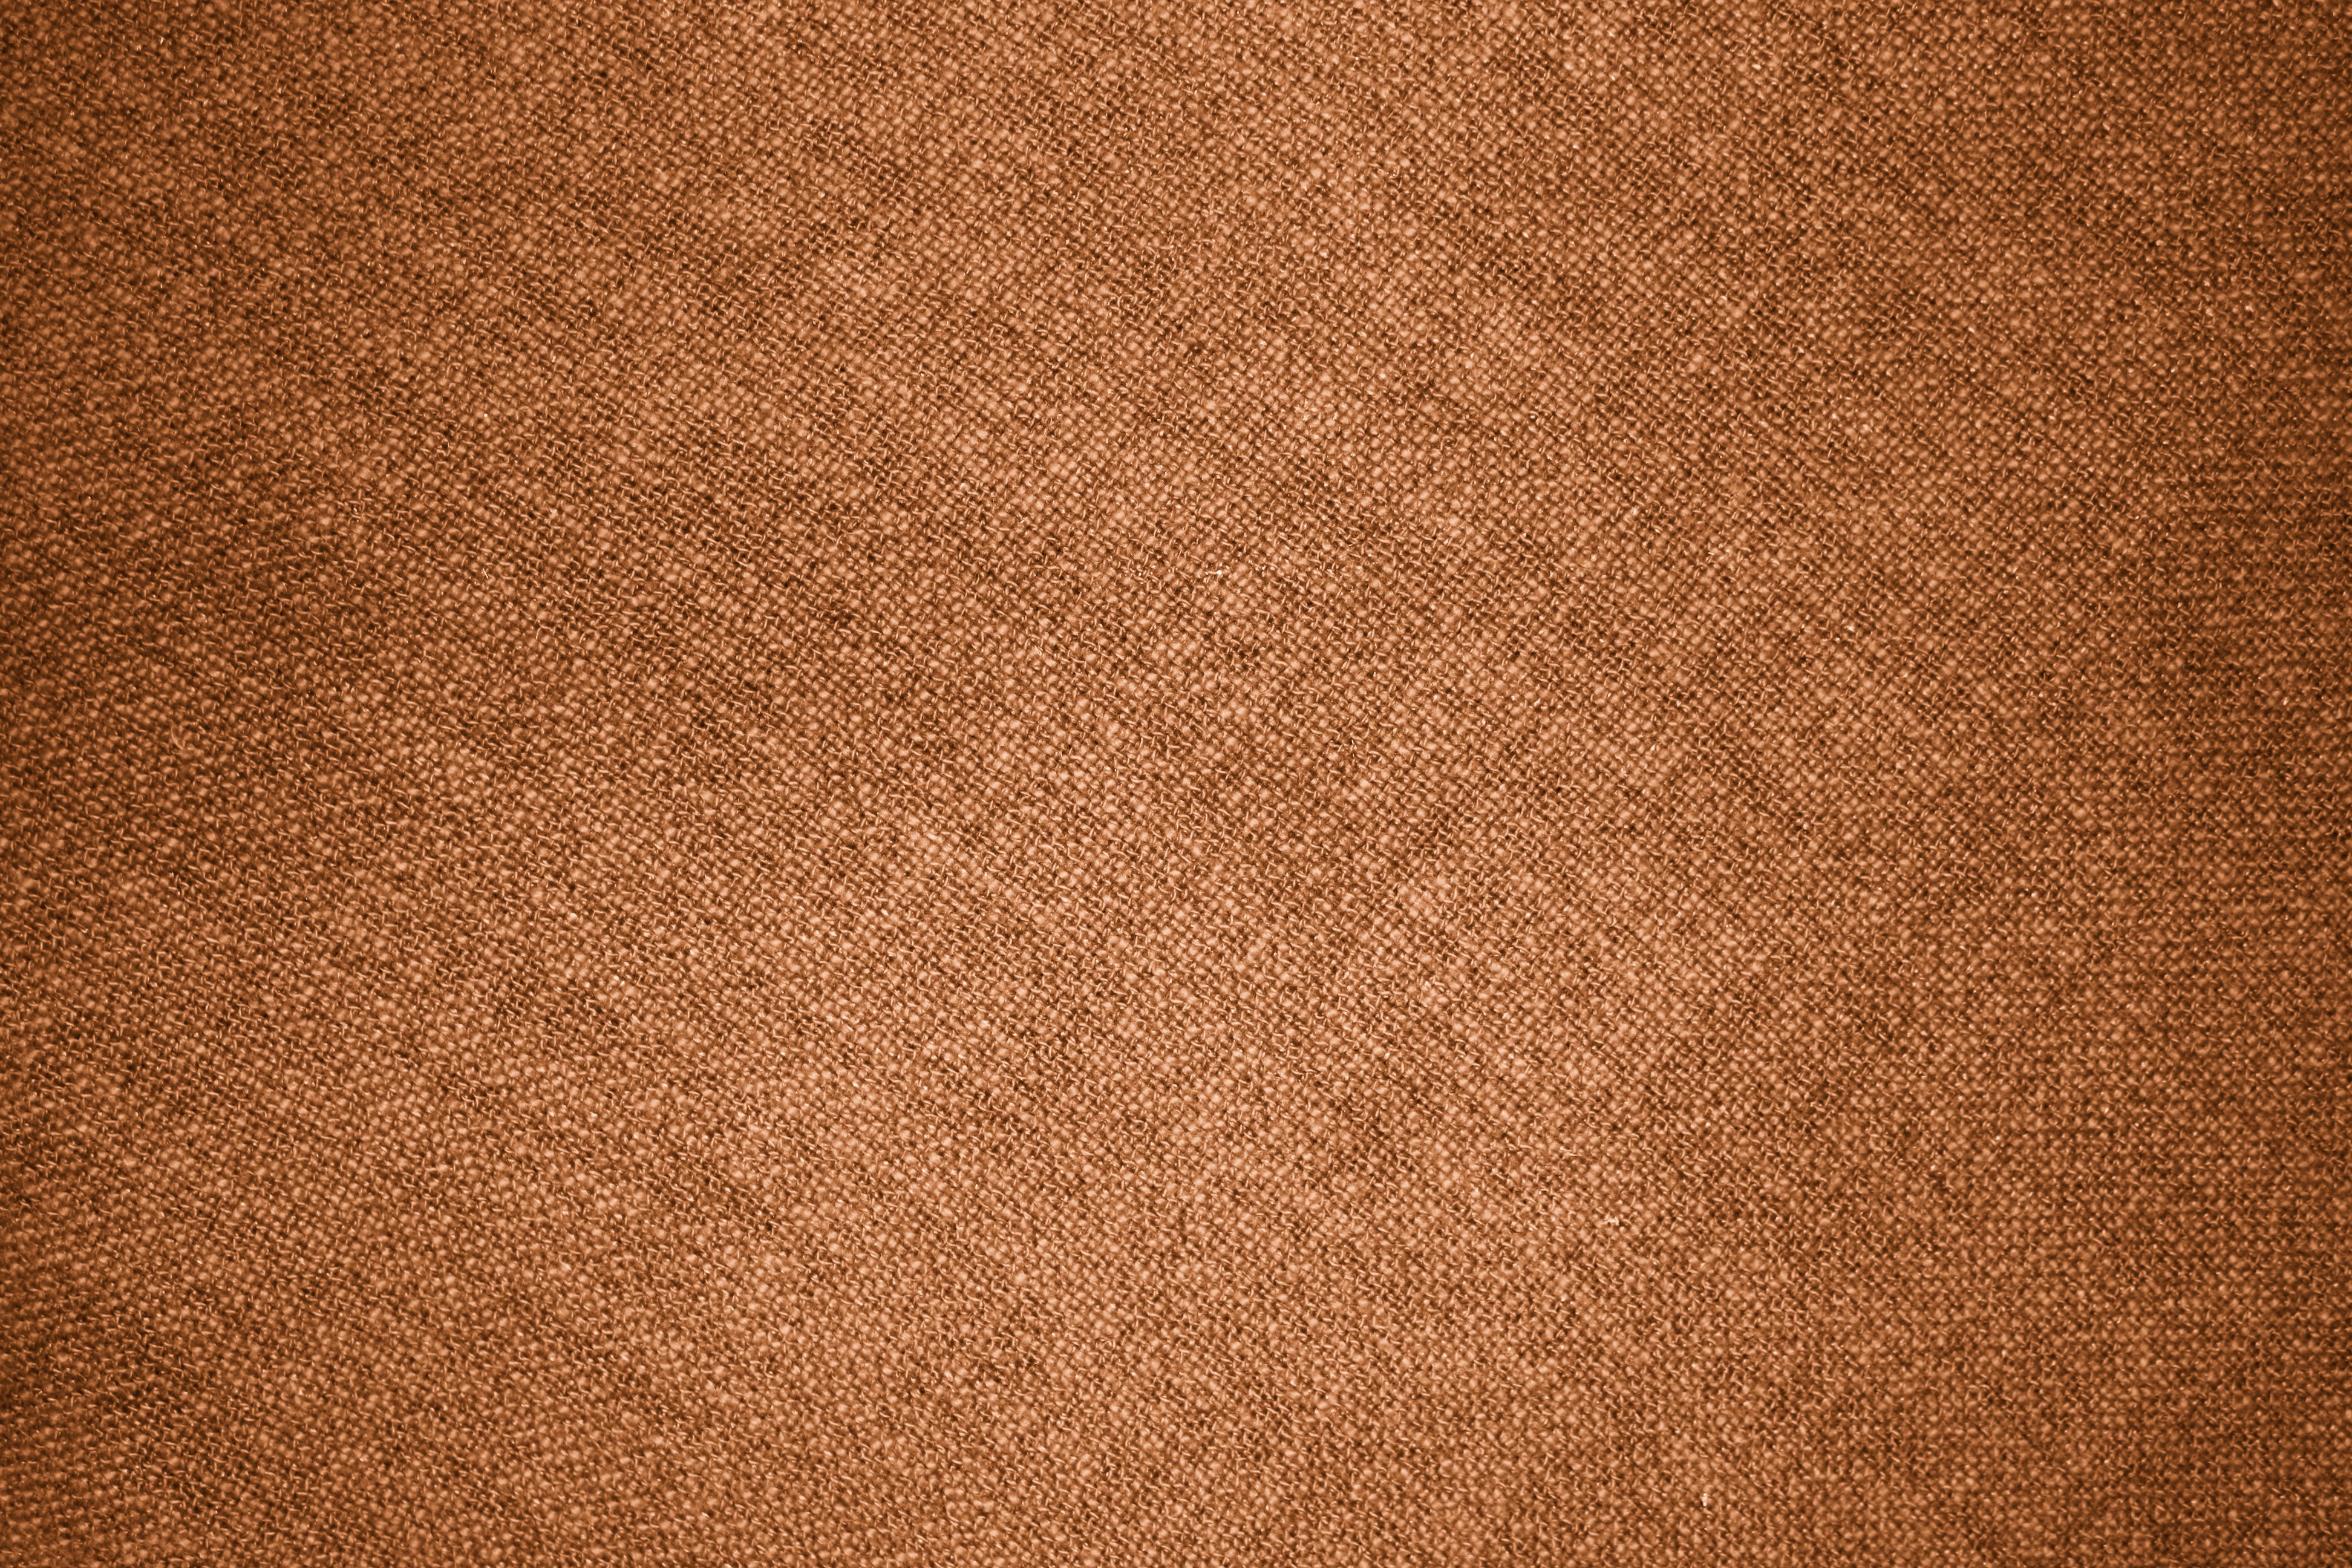 General 3888x2592 texture template minimalism brown closeup fabric